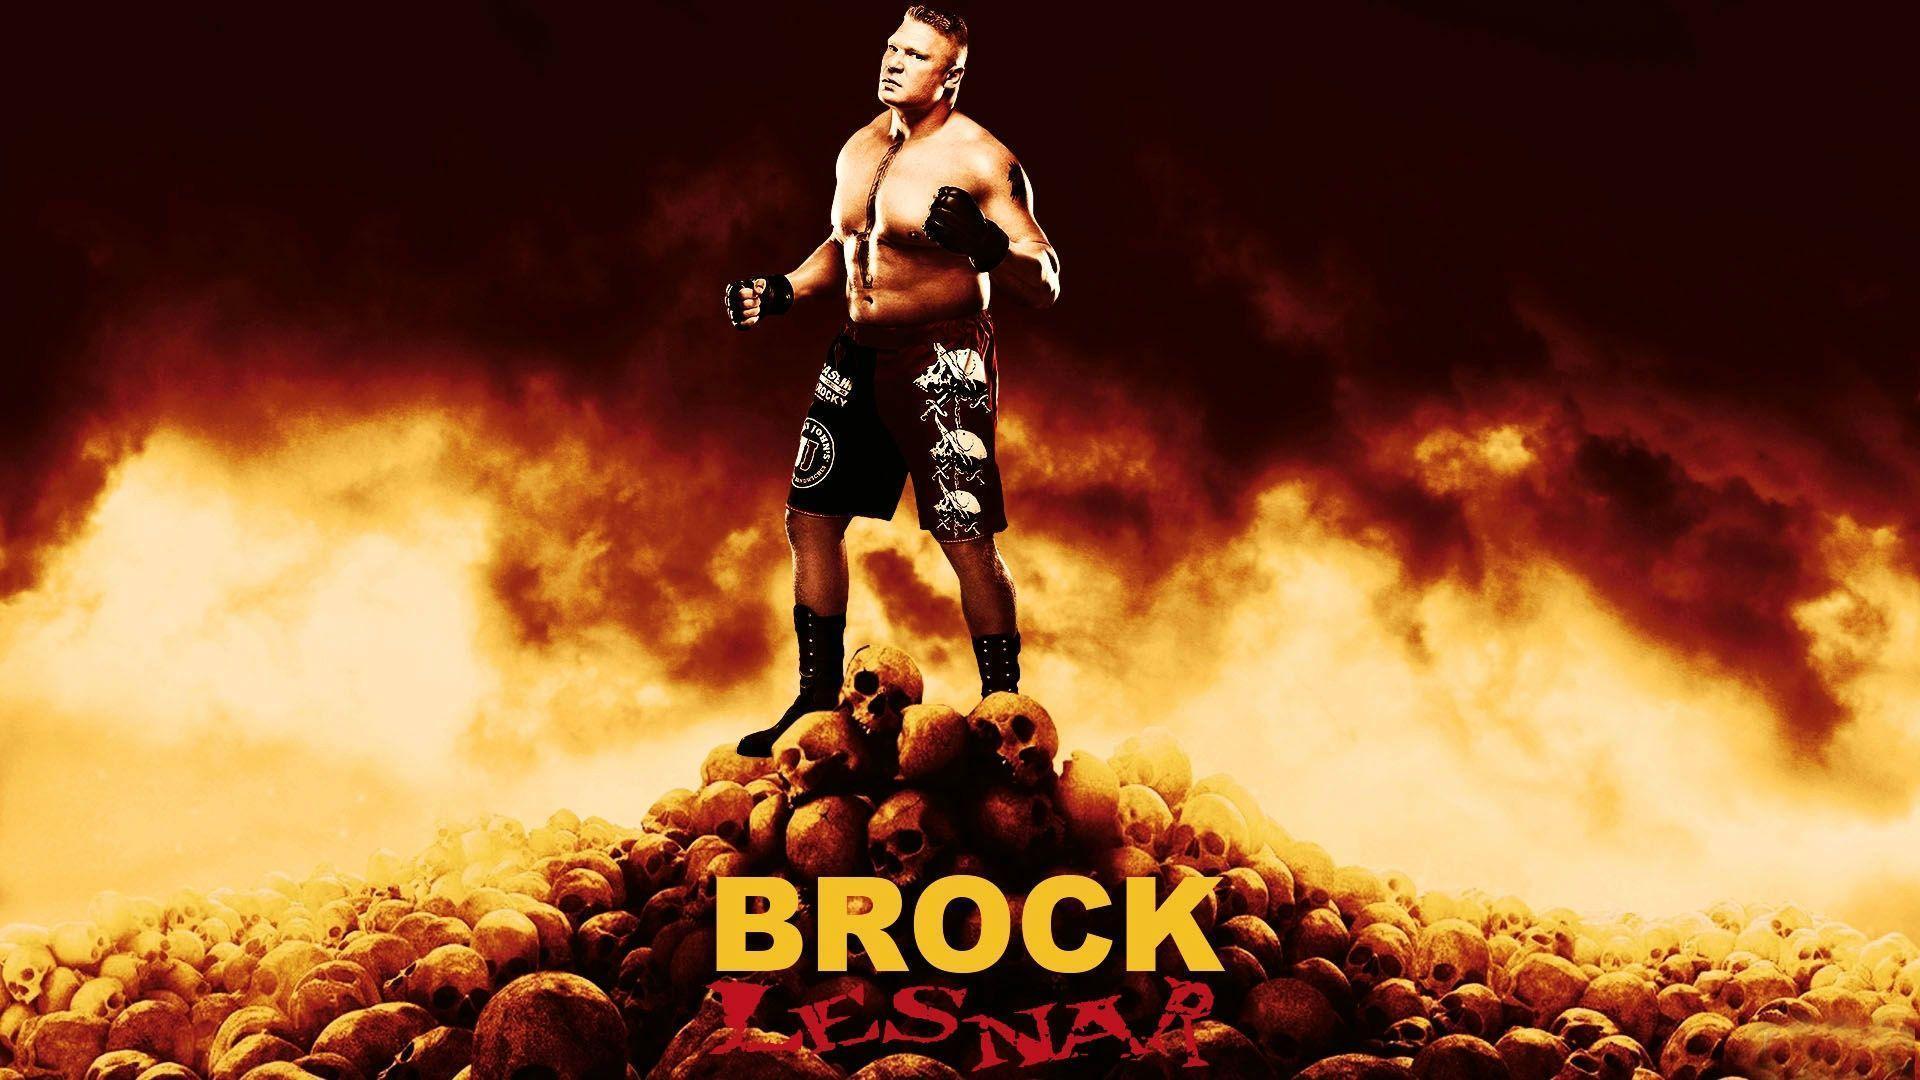 Brock Lesnar WWE Wrestler HD Wallpaper. HD Wallpaper Image